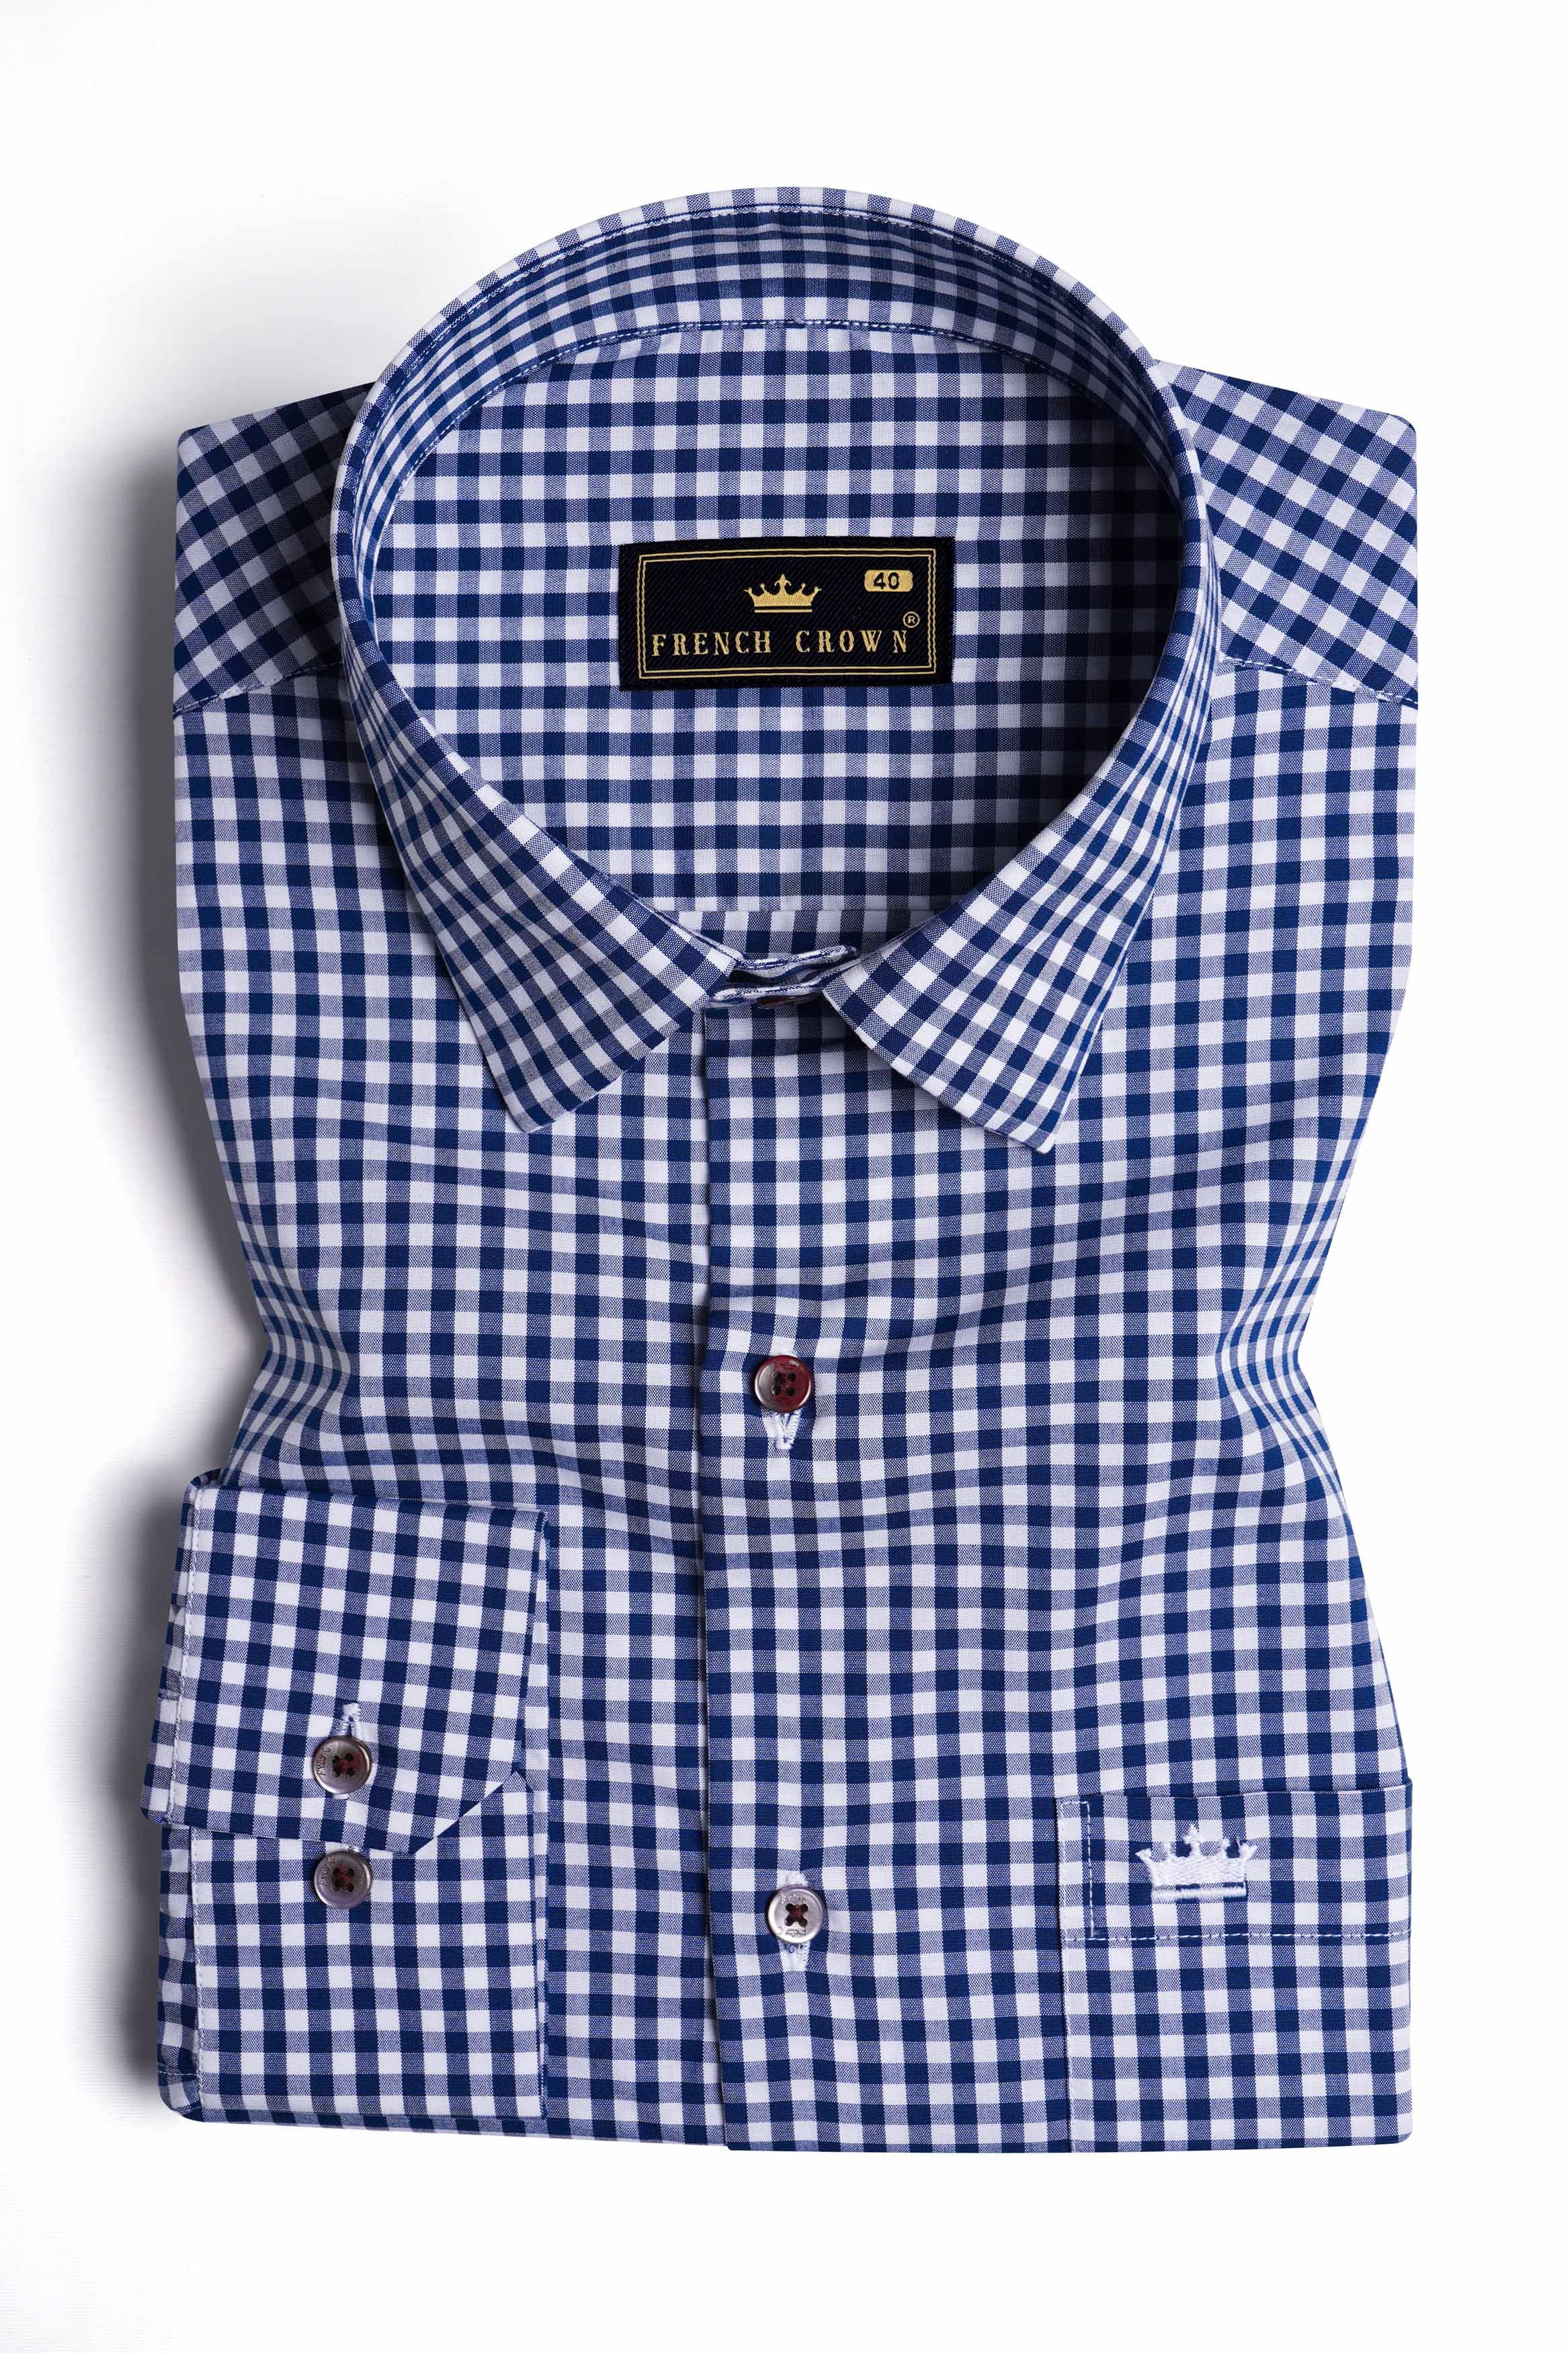 Bright White and Biscay Blue Gingham Checkered Premium Cotton Shirt